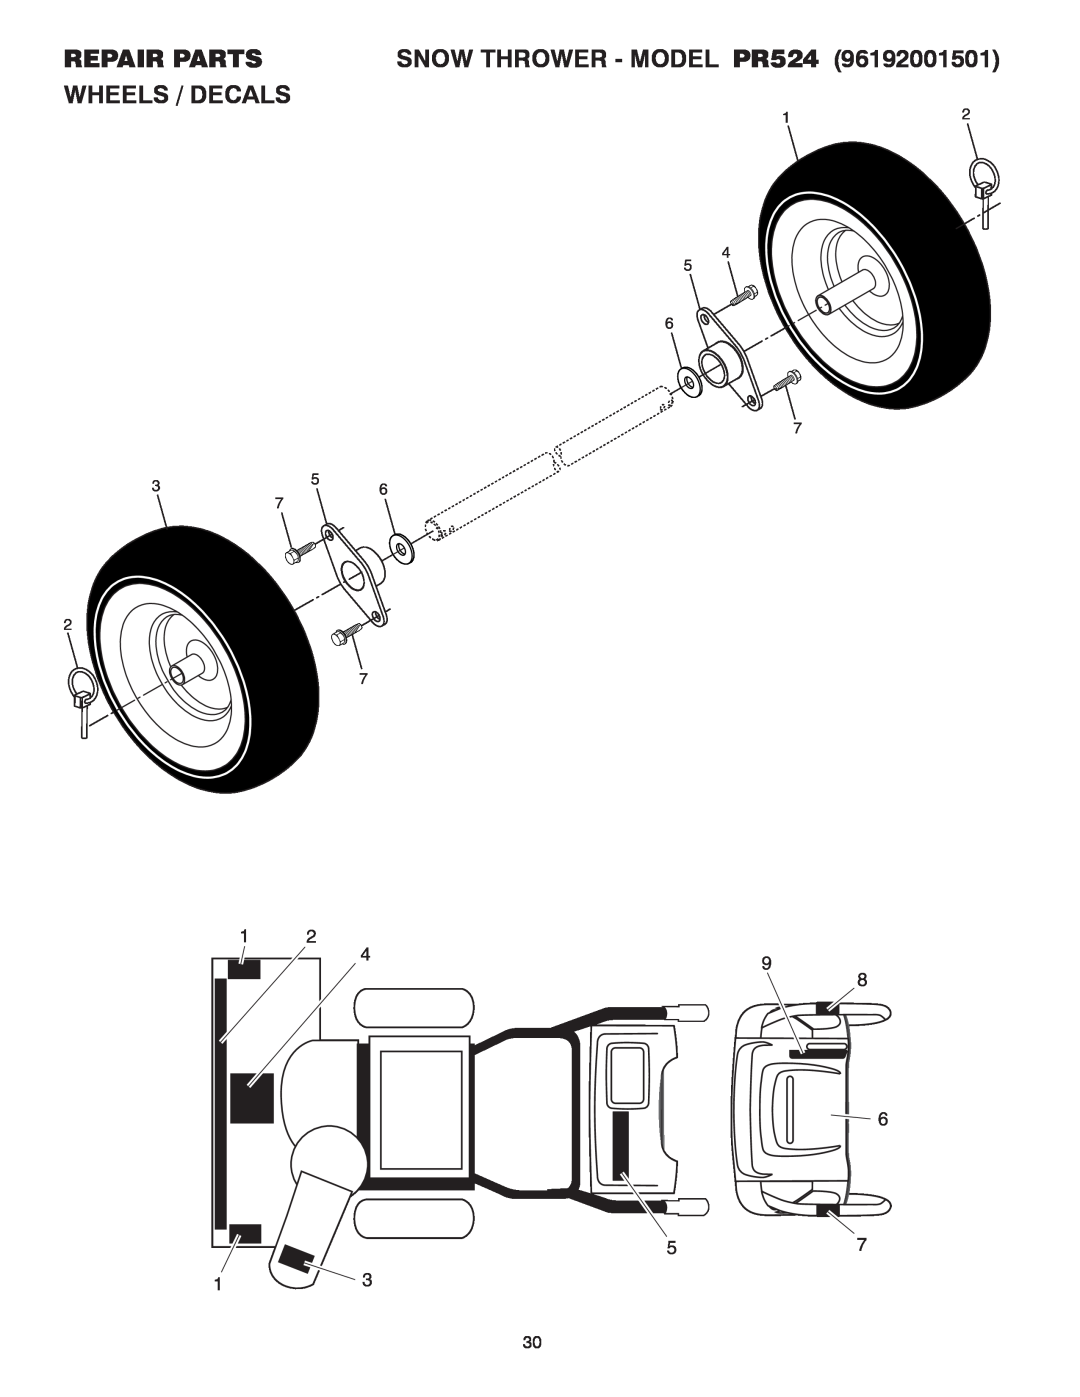 Poulan 415242 owner manual Wheels / Decals, Repair Parts, SNOW THROWER - MODEL PR524 